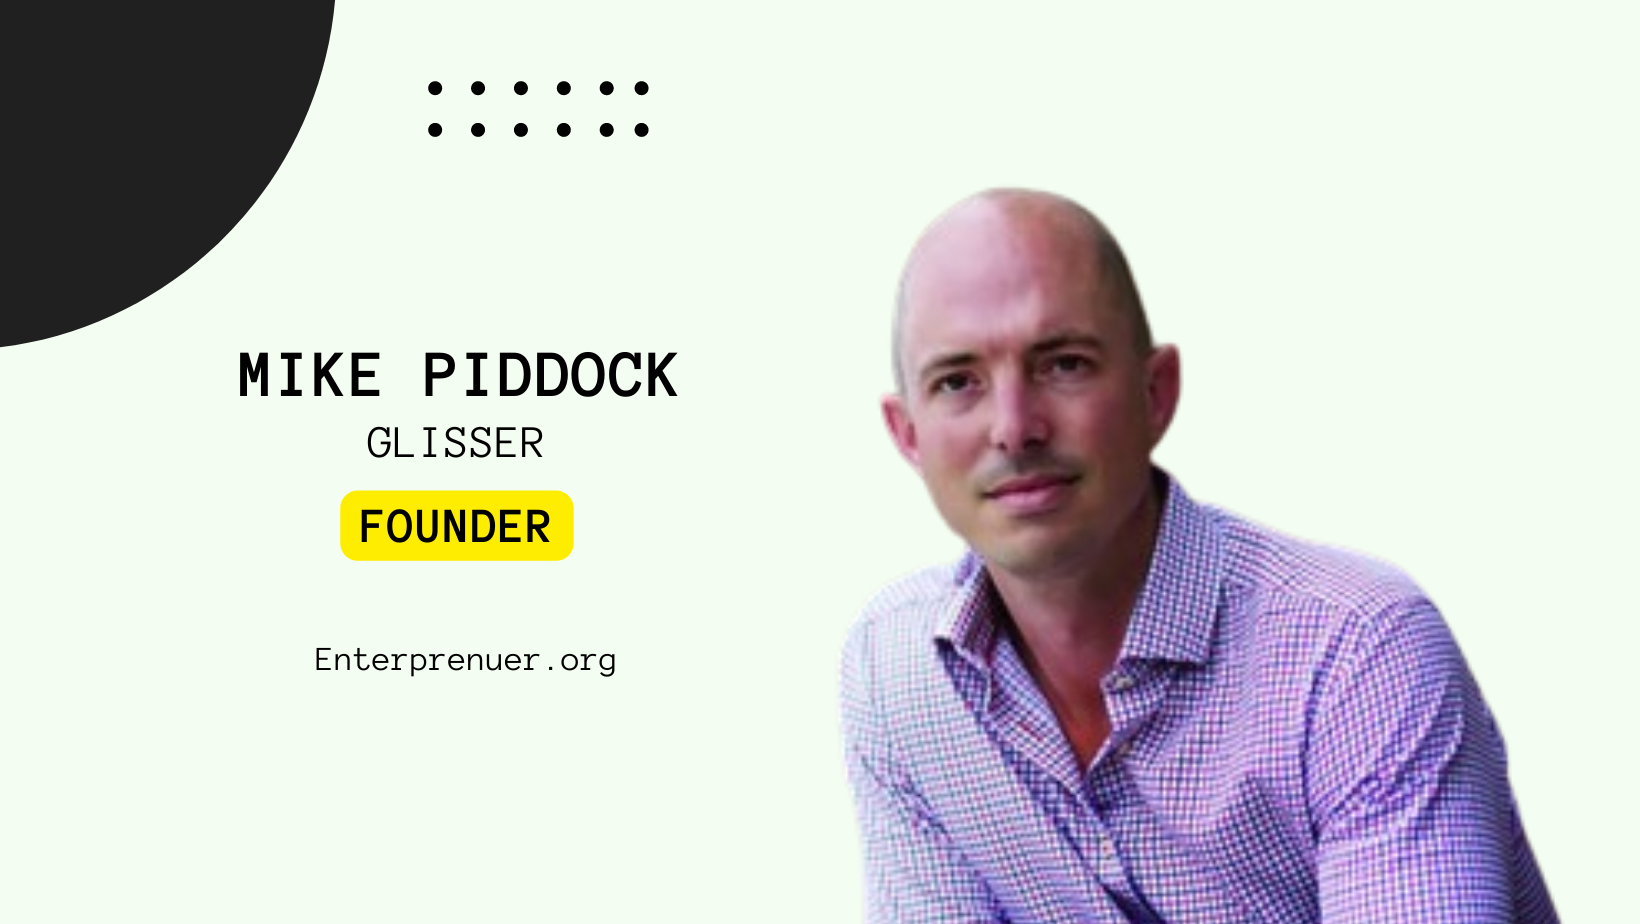 Meet Mike Piddock Founder of Glisser